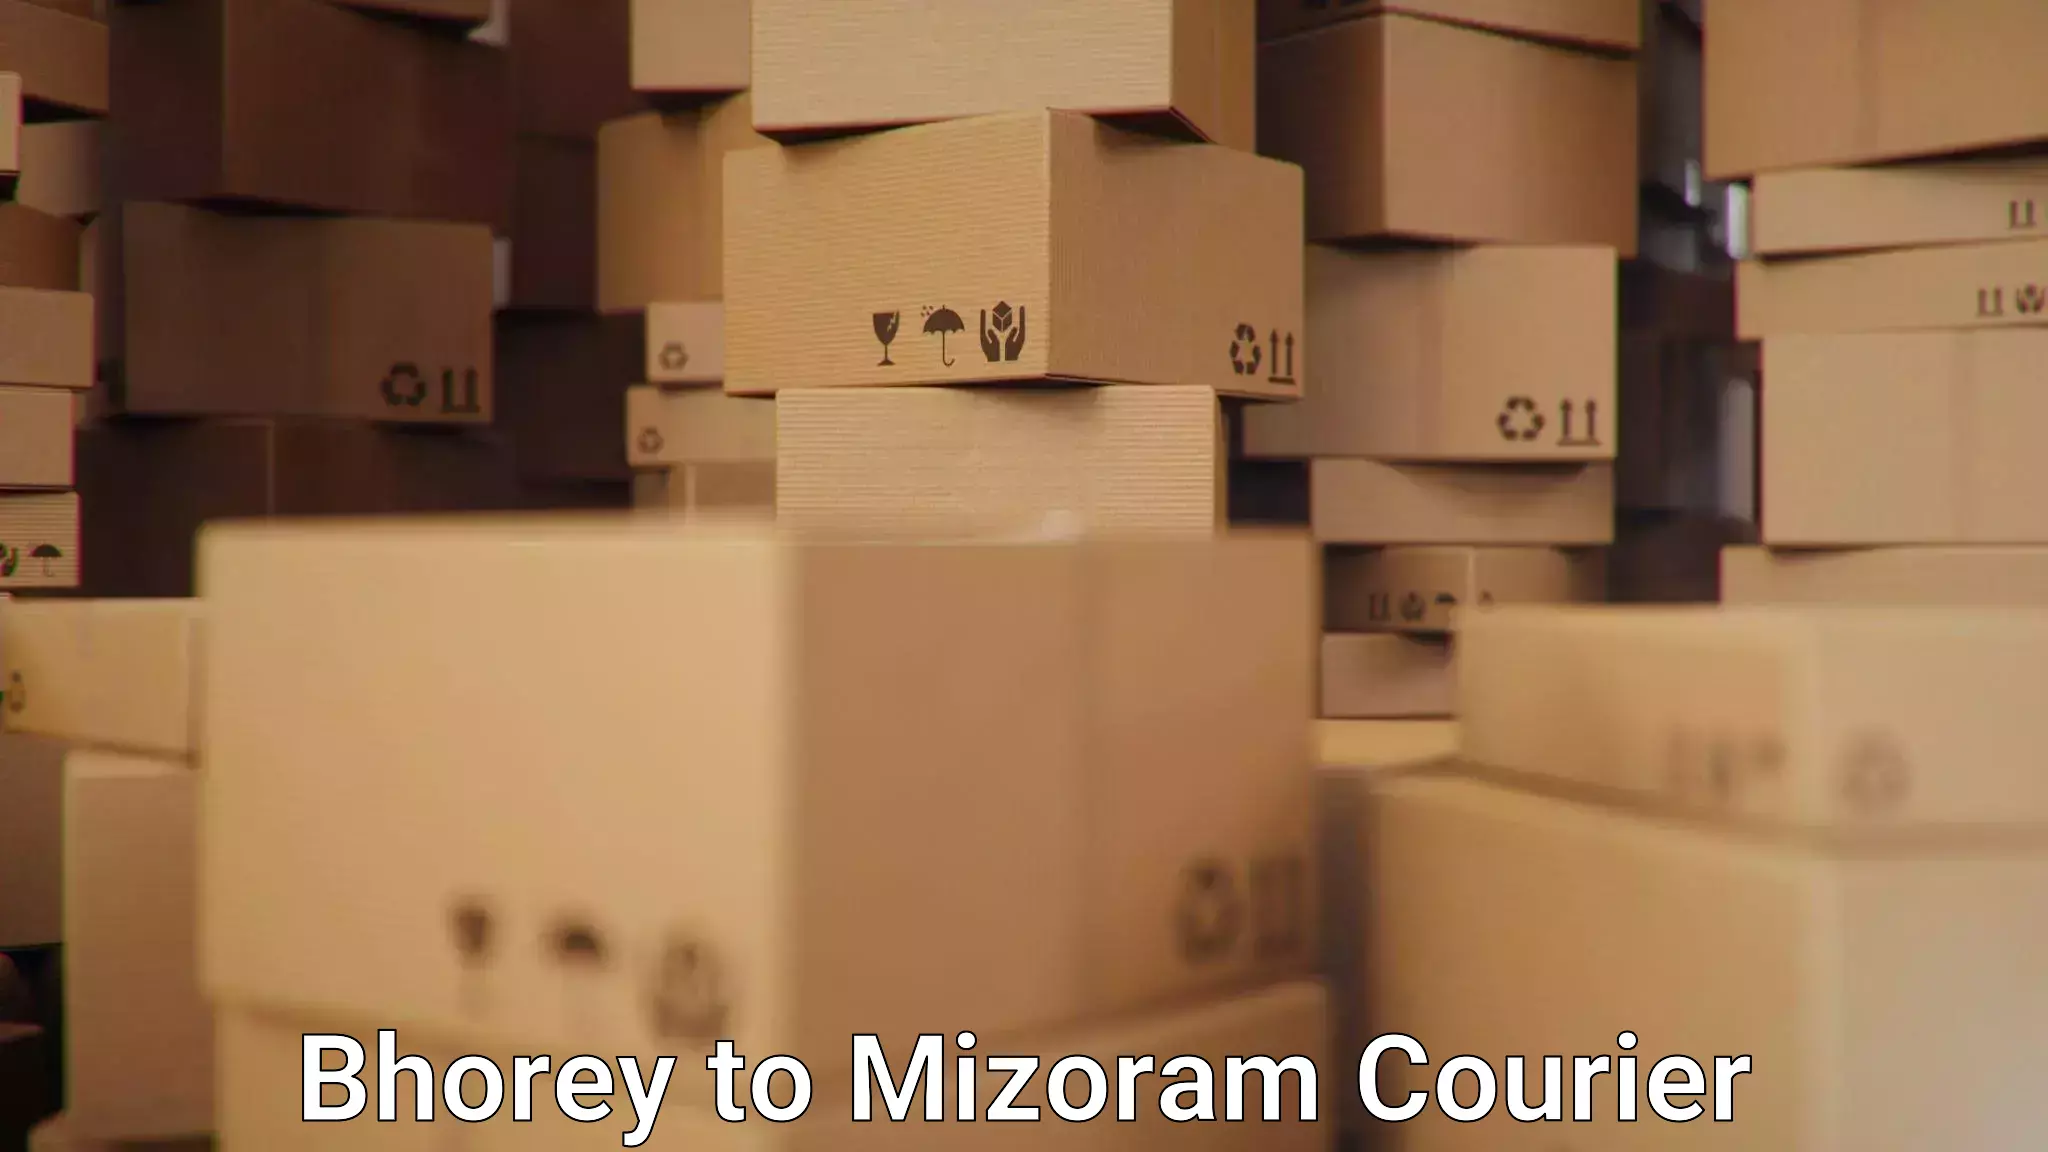 Courier service booking Bhorey to Mizoram